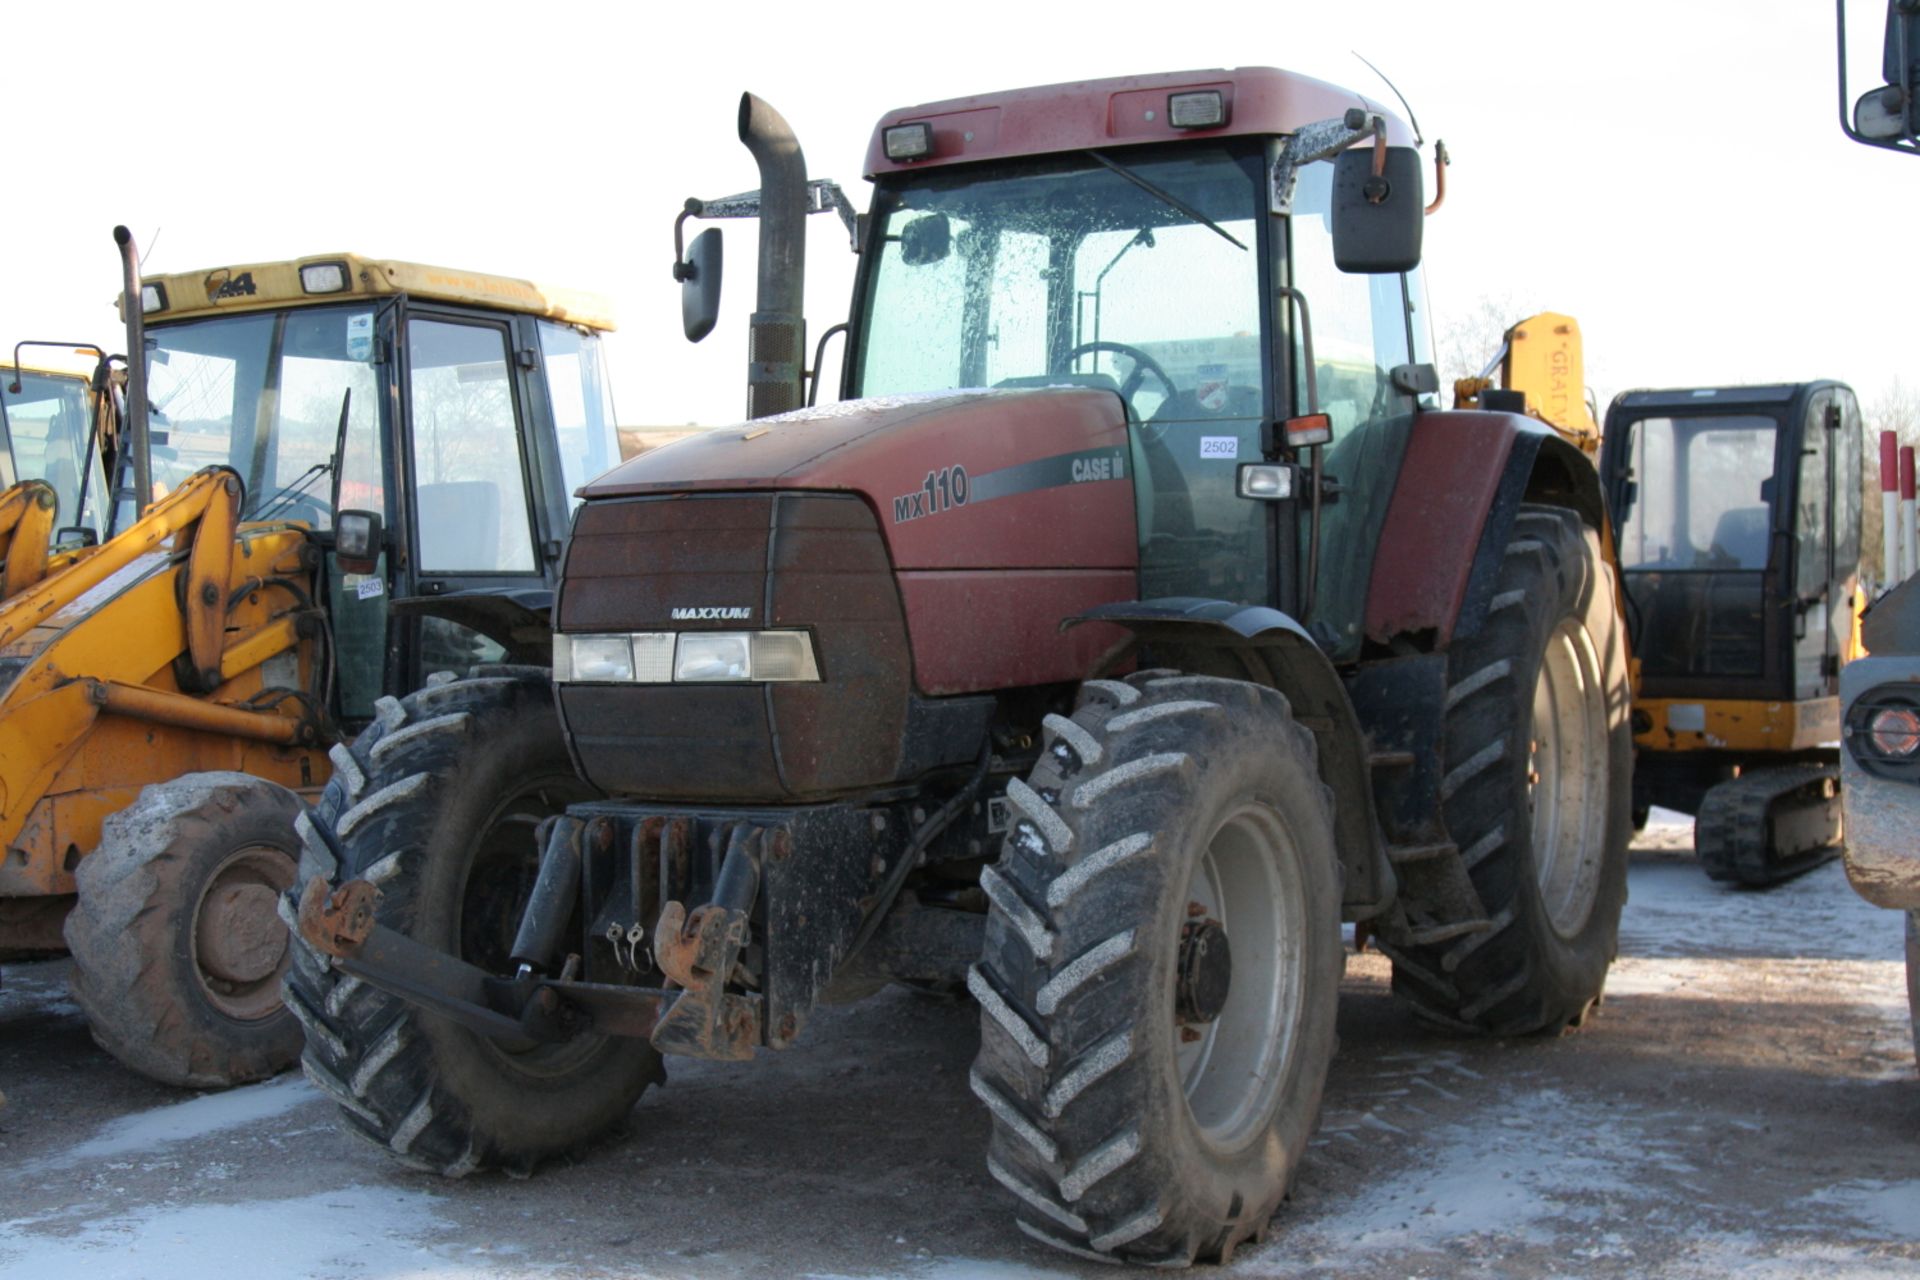 Case International MC110 Tractor